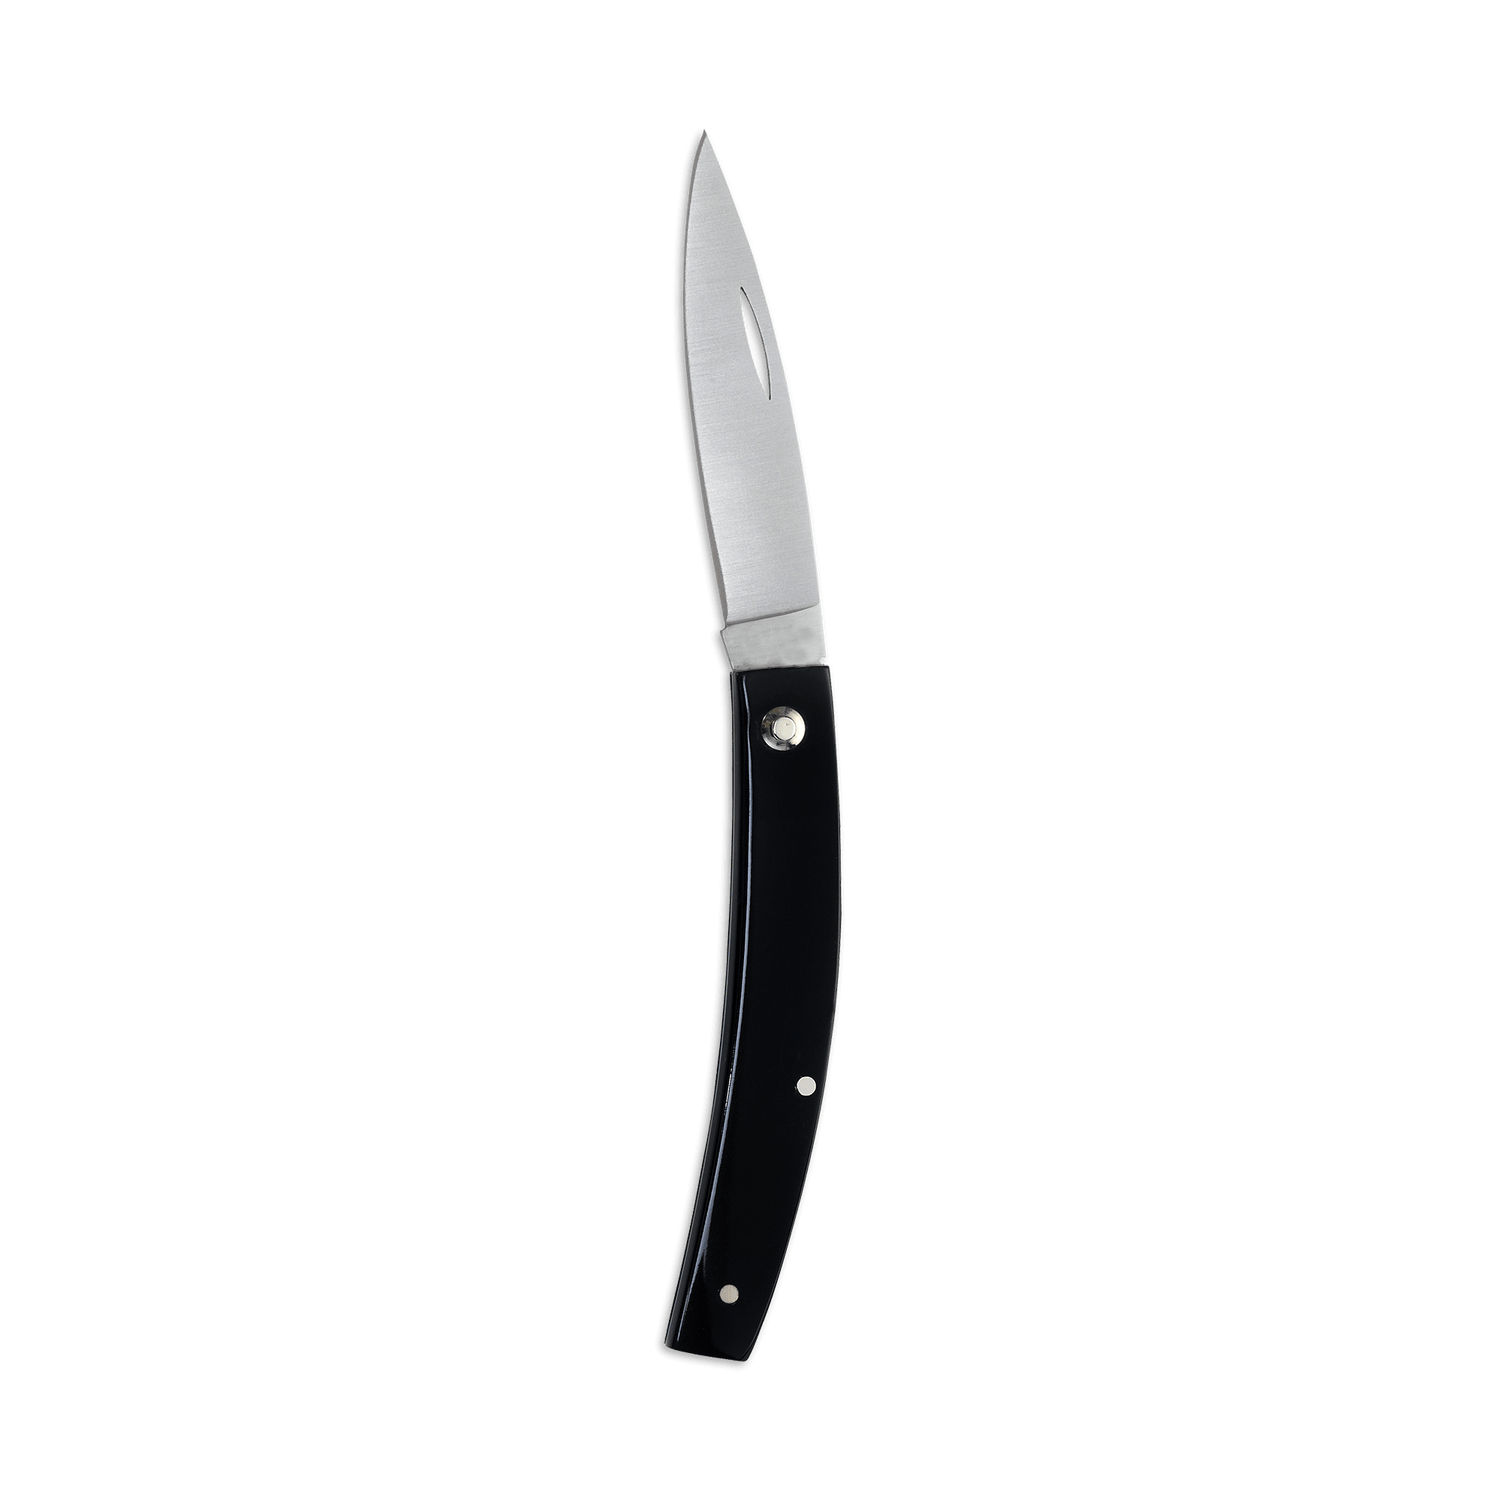 Berti Straight Paring Knife - Red – Relish Decor